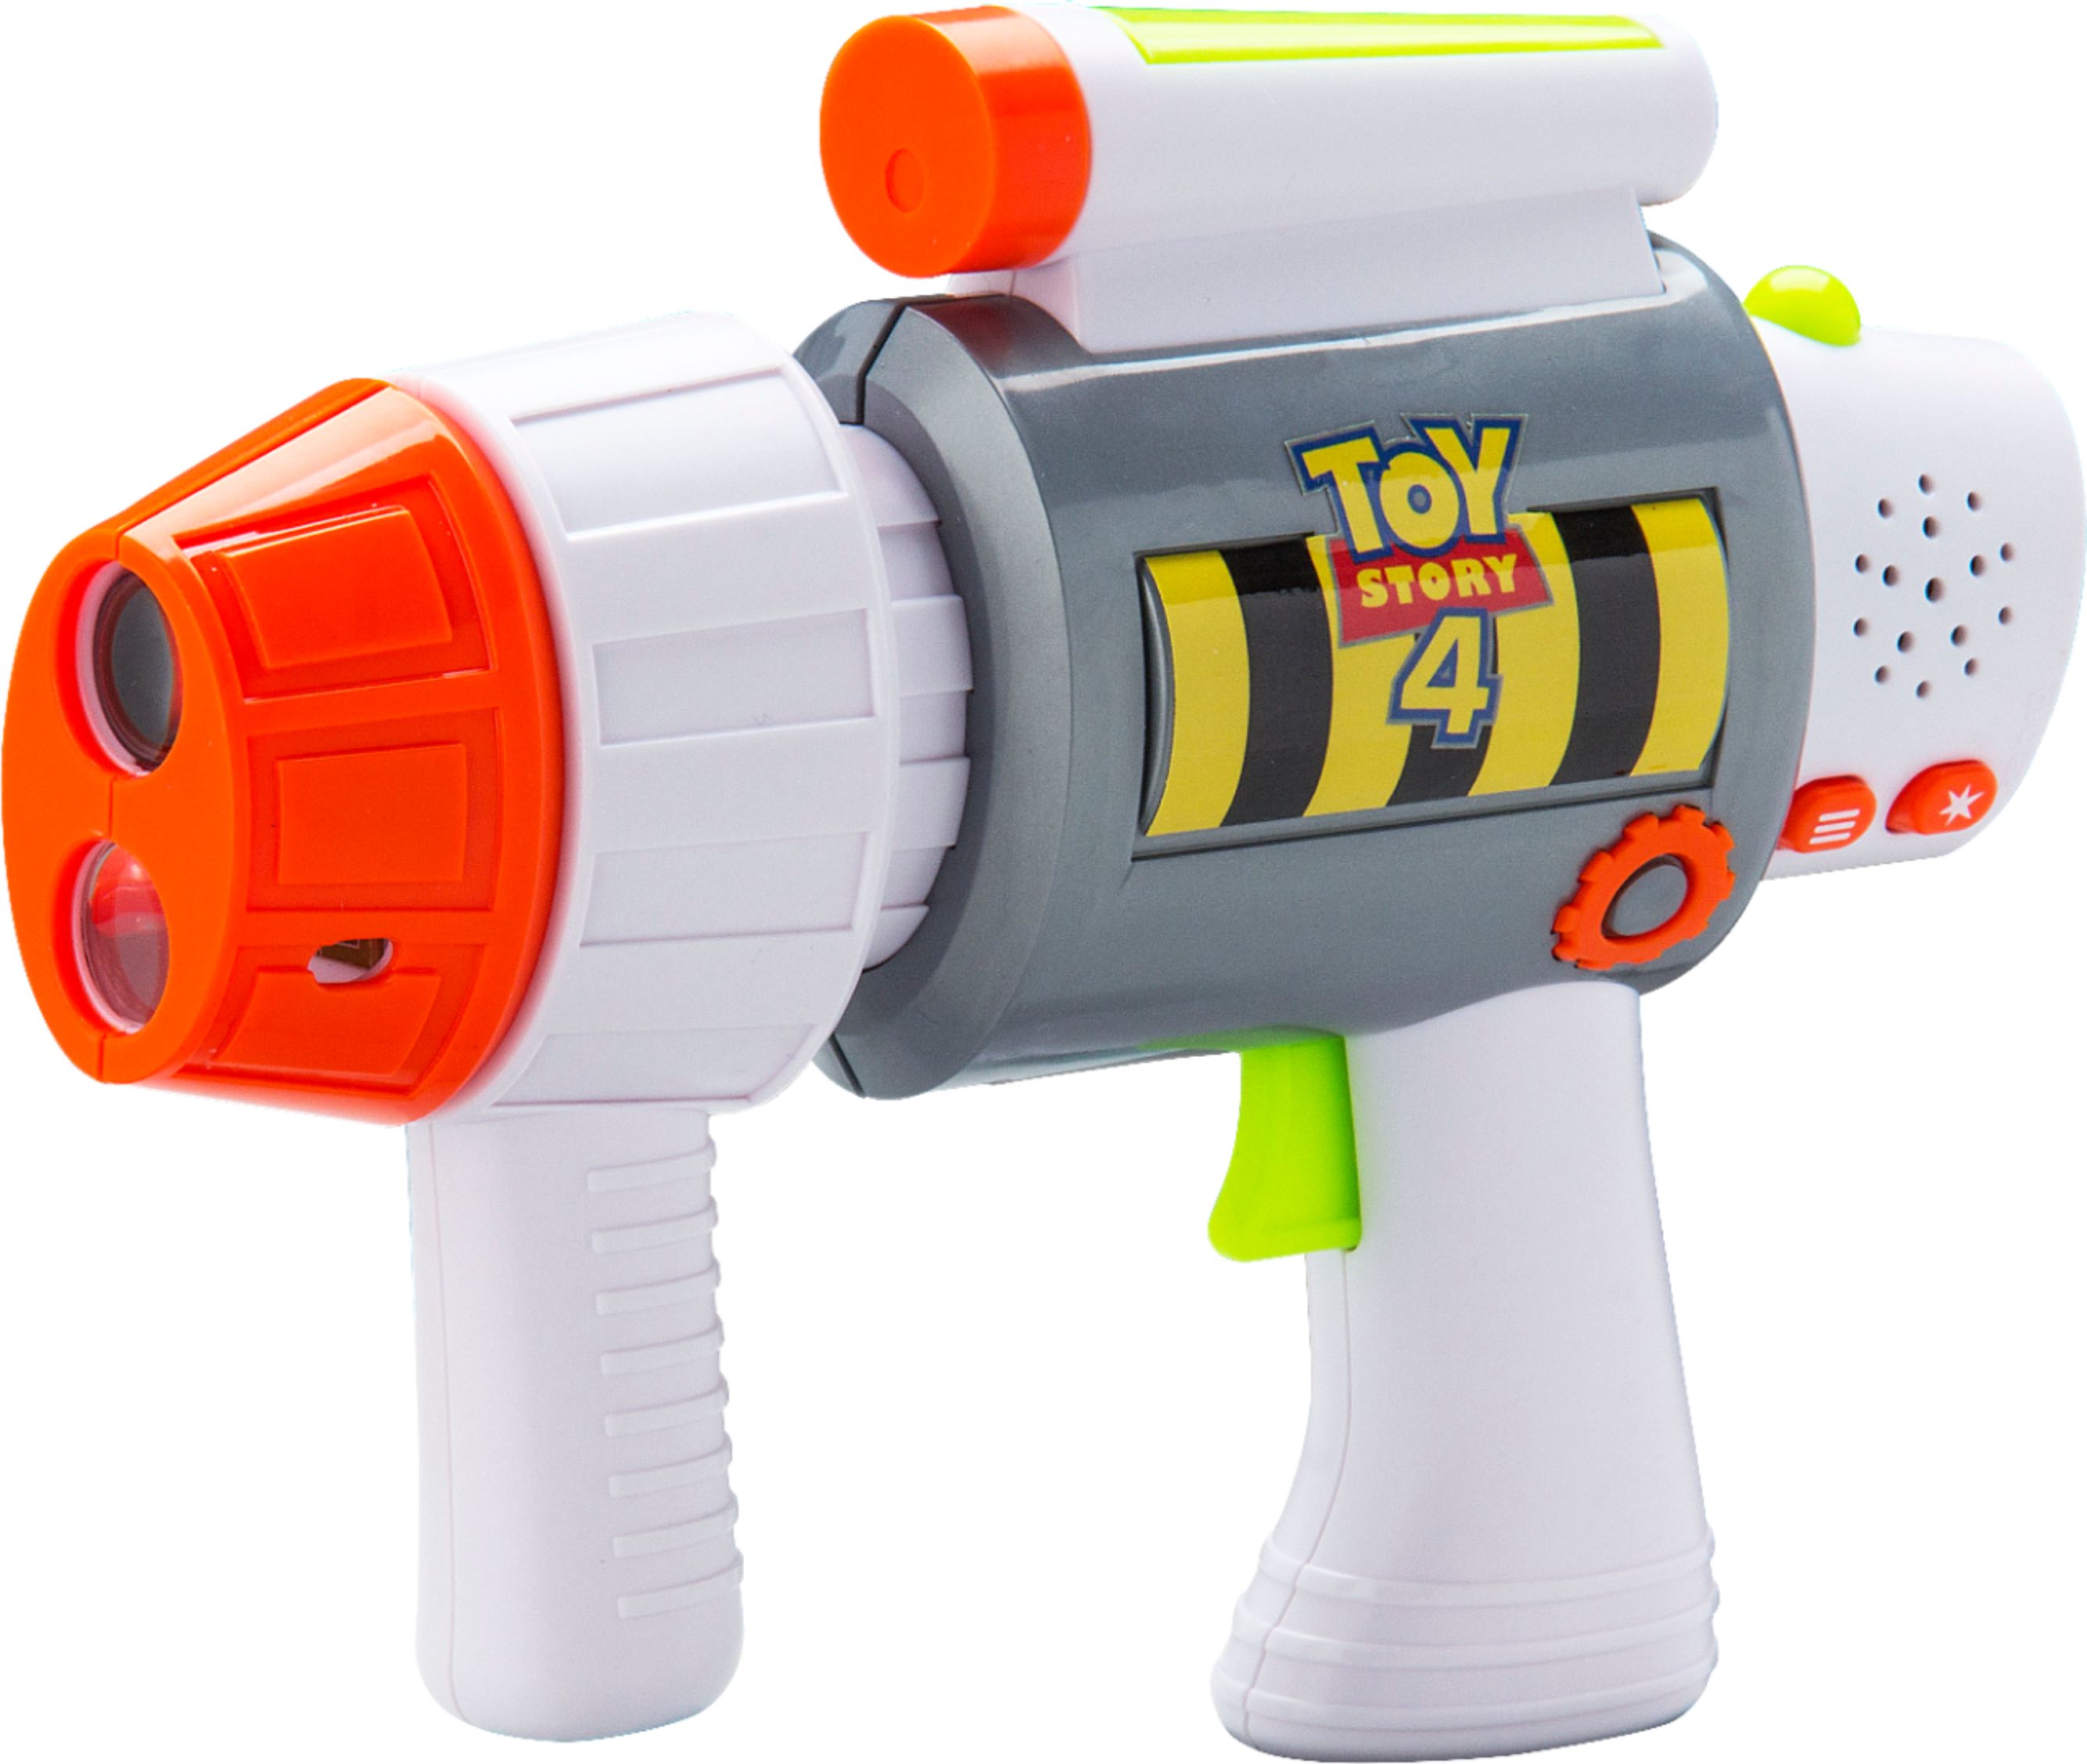 toy laser tag shooting game